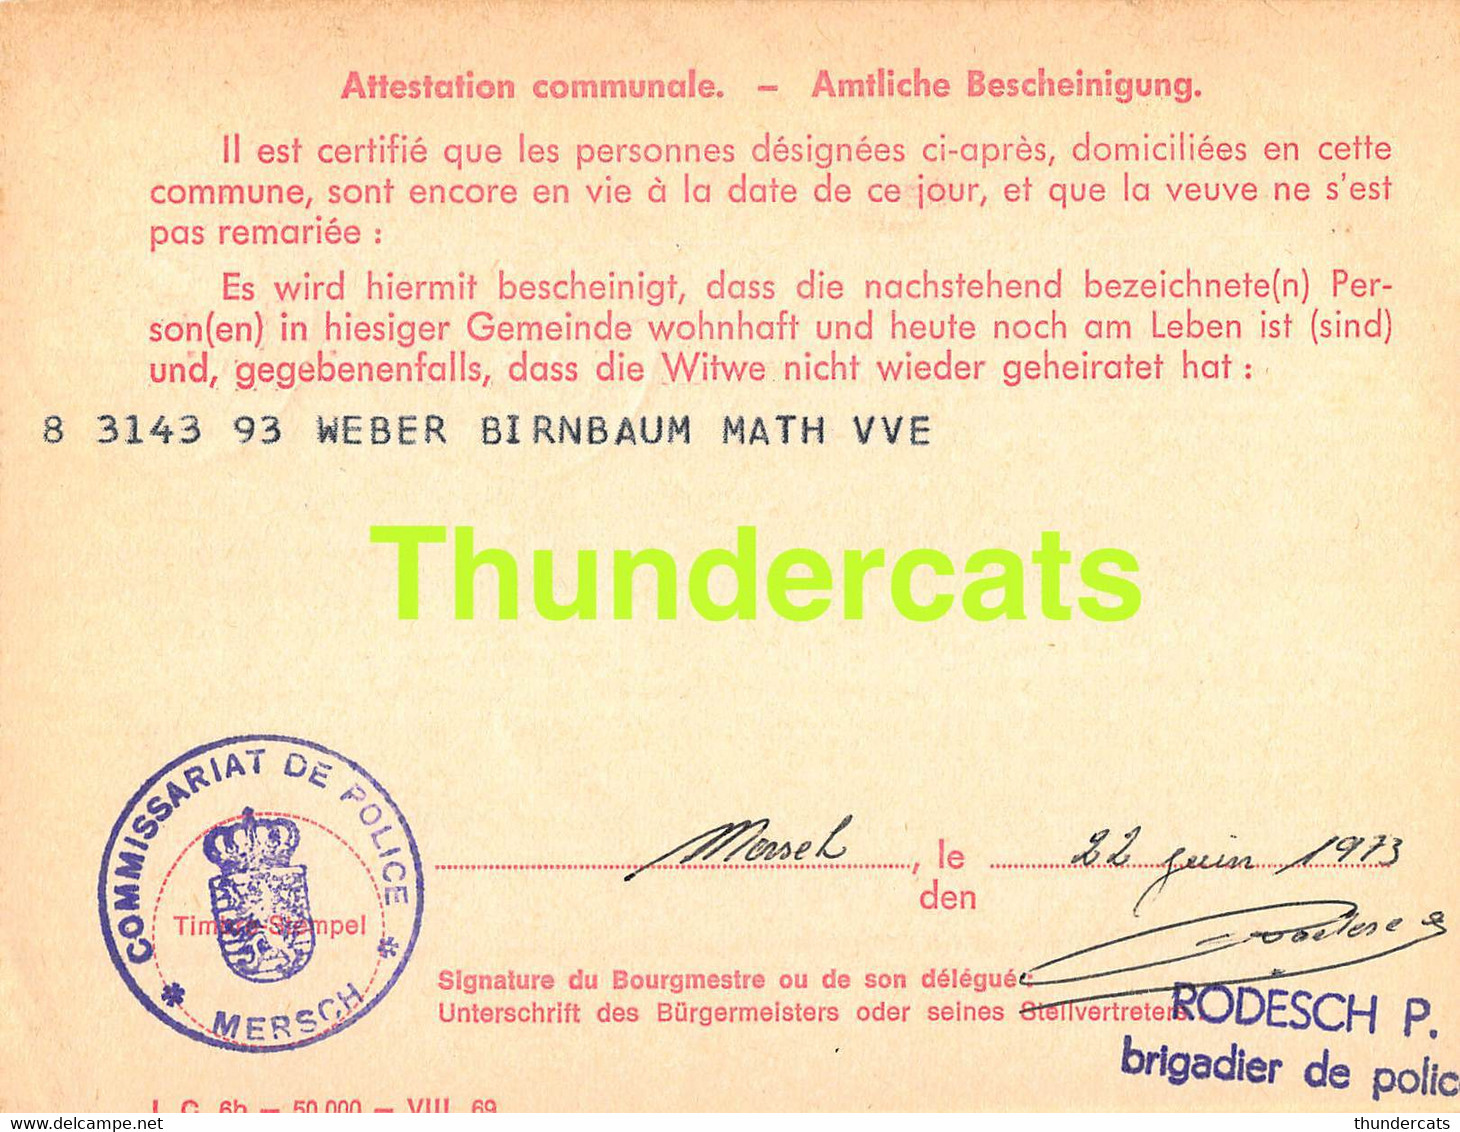 ASSURANCE VIEILLESSE INVALIDITE LUXEMBOURG 1973 MERSCH WEBER BIRNBAUM - Briefe U. Dokumente